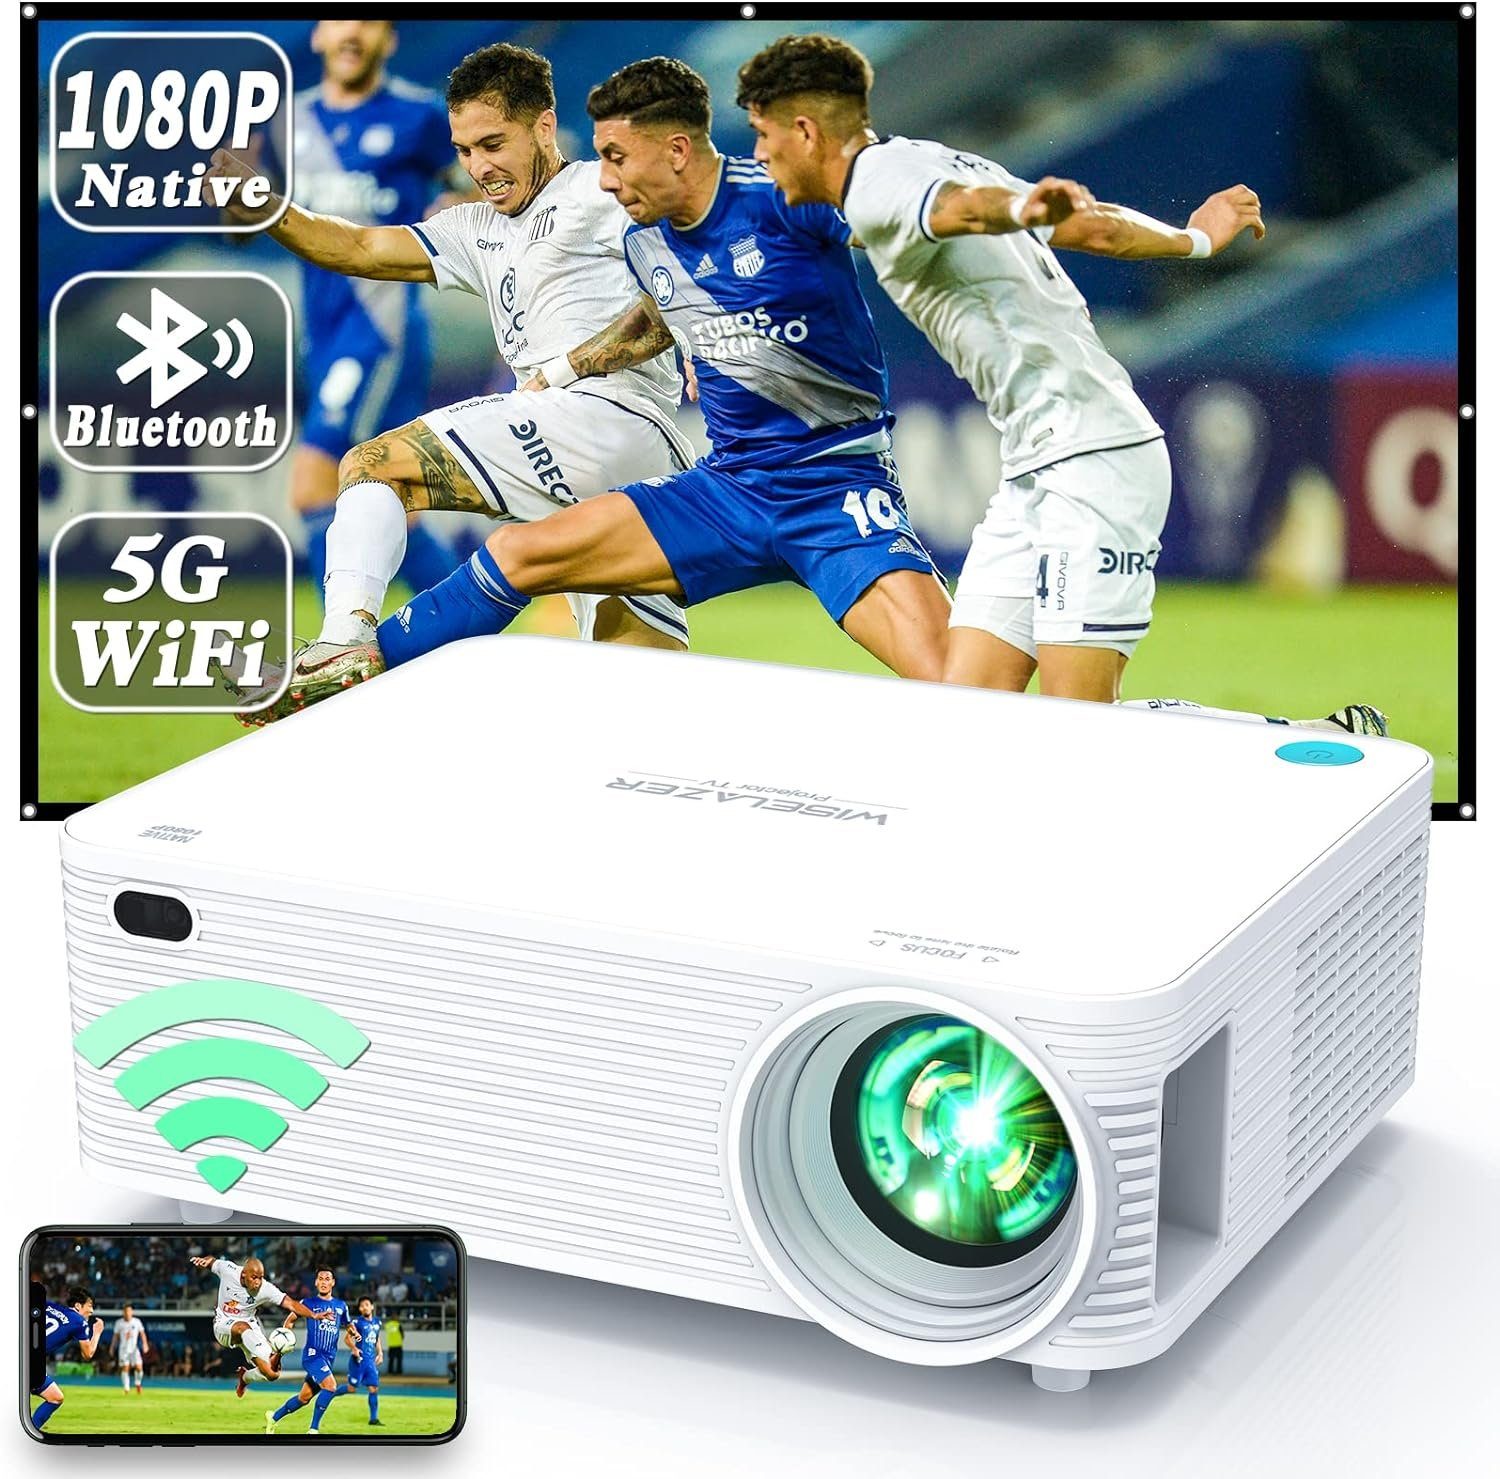 WISELAZER Portabler Projektor (3840 x 2160 px, Full HD Heimkino Beamer 1080P 5G WiFi, Bluetooth, HDMI/USB, TV Box PC)